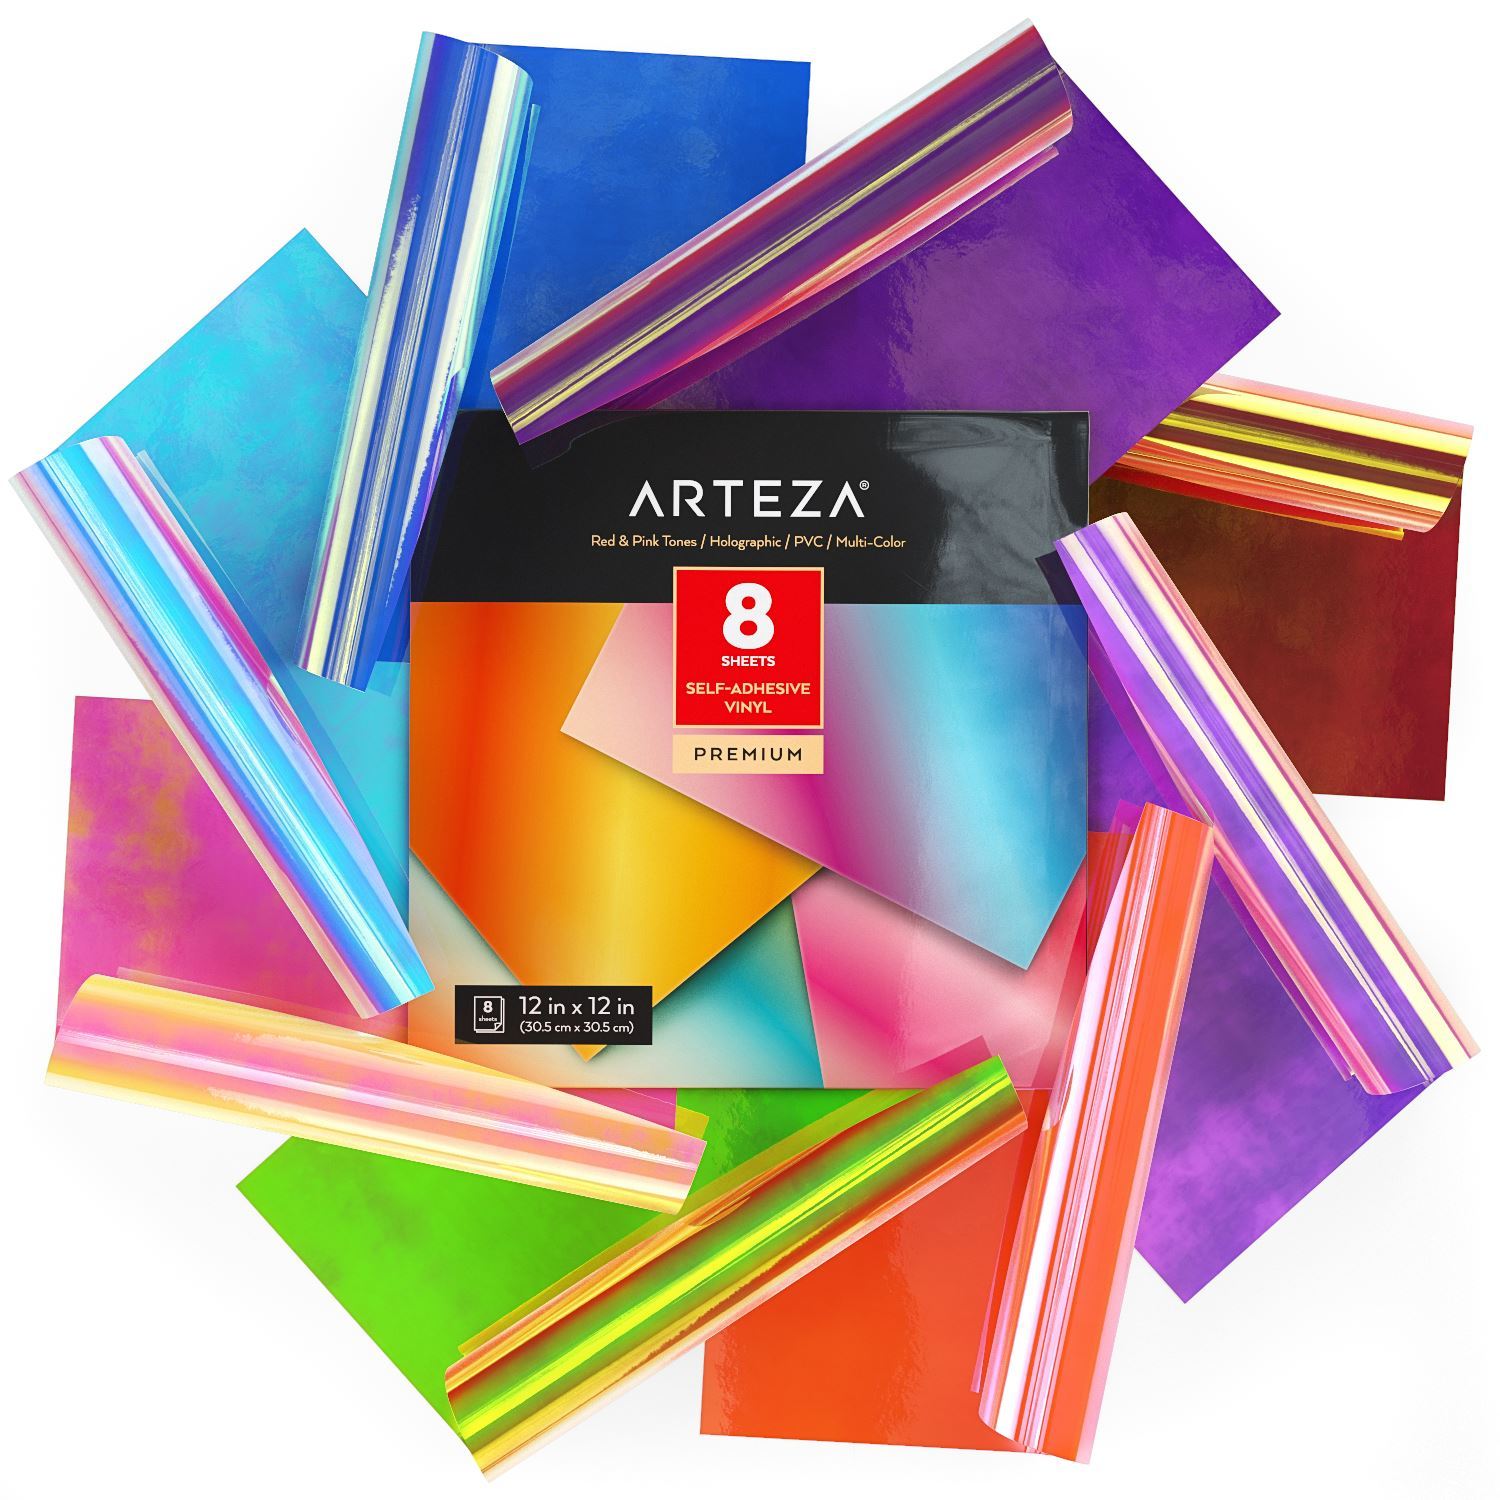 Holographic Adhesive Vinyl, Red & Tones – Arteza.com